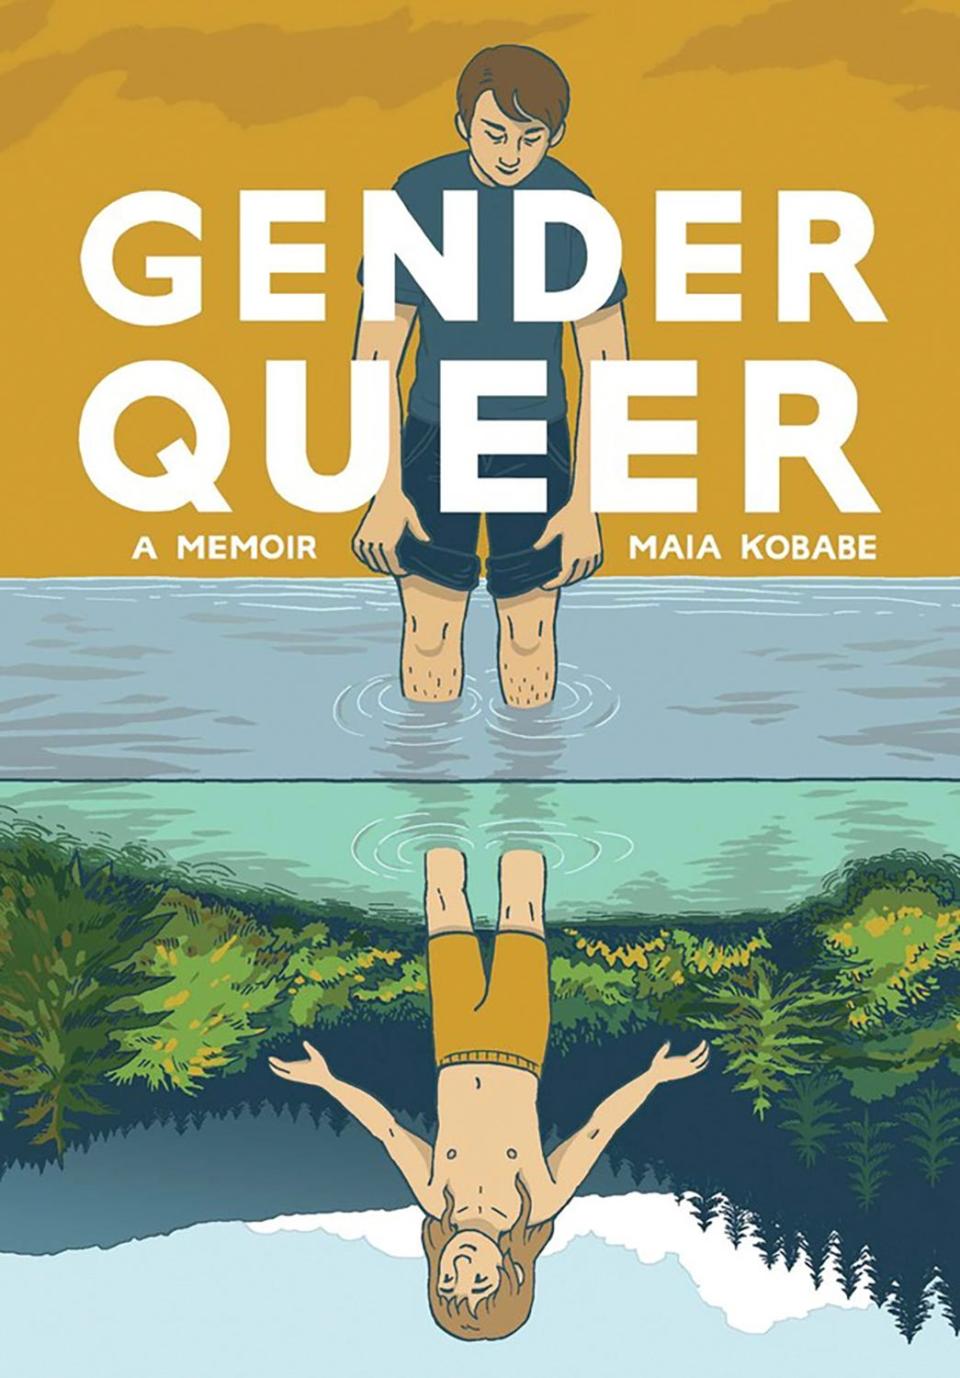 The book cover of "Gender Queer: A Memoir.'